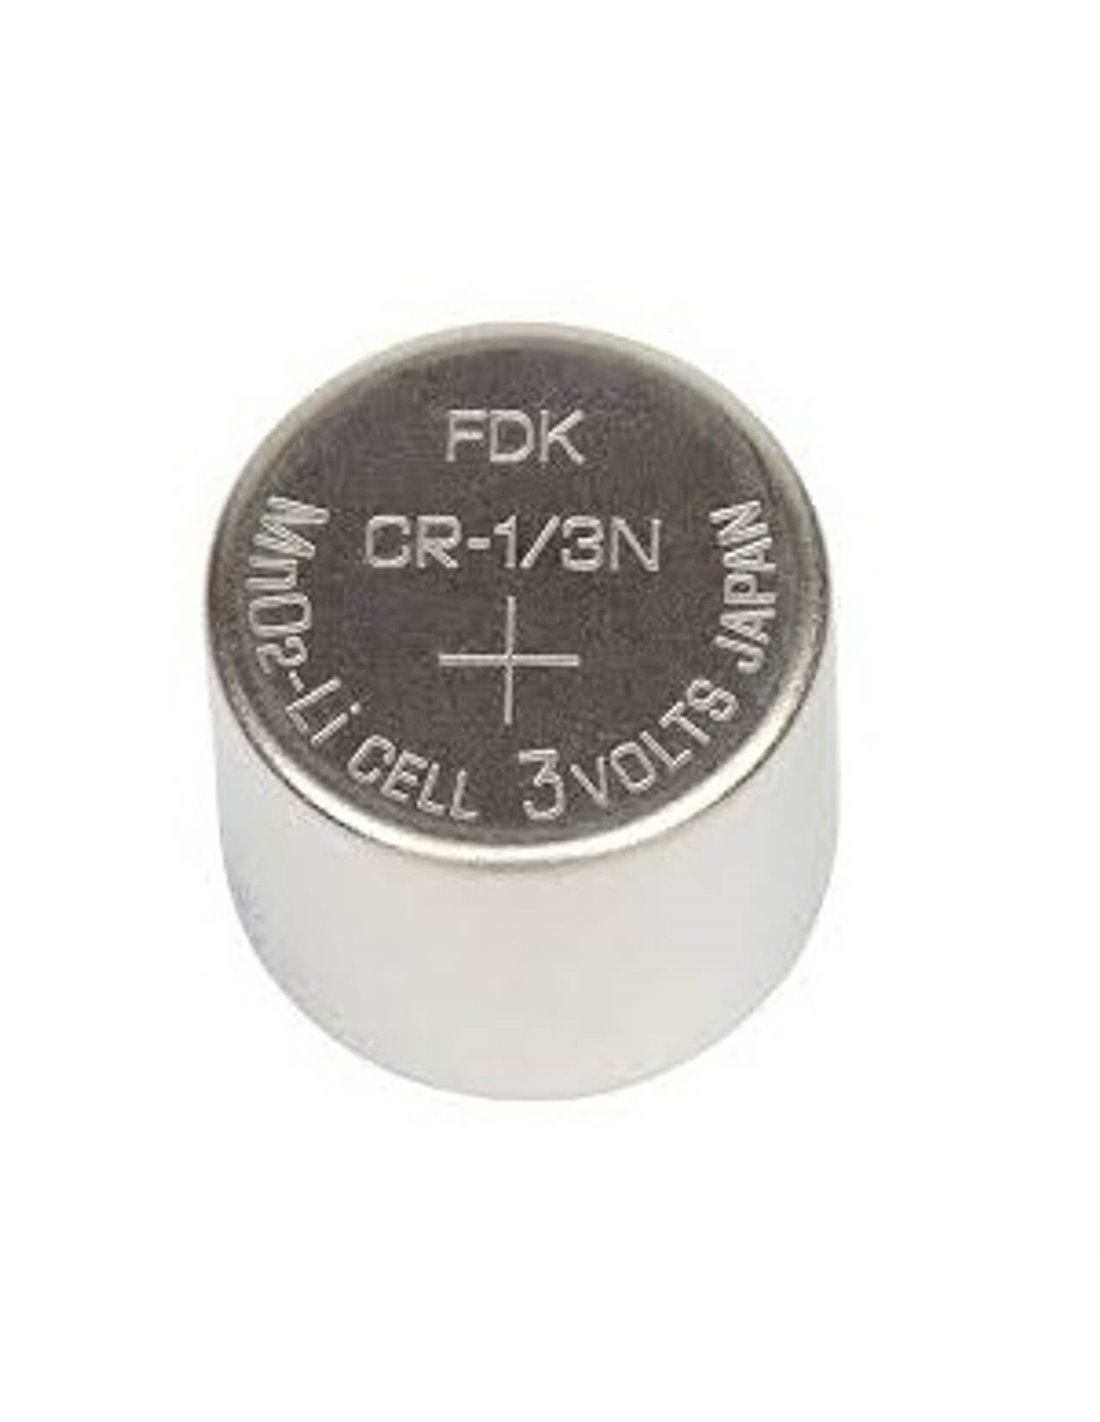 CR1/3N FDK-Sanyo Lithium Battery